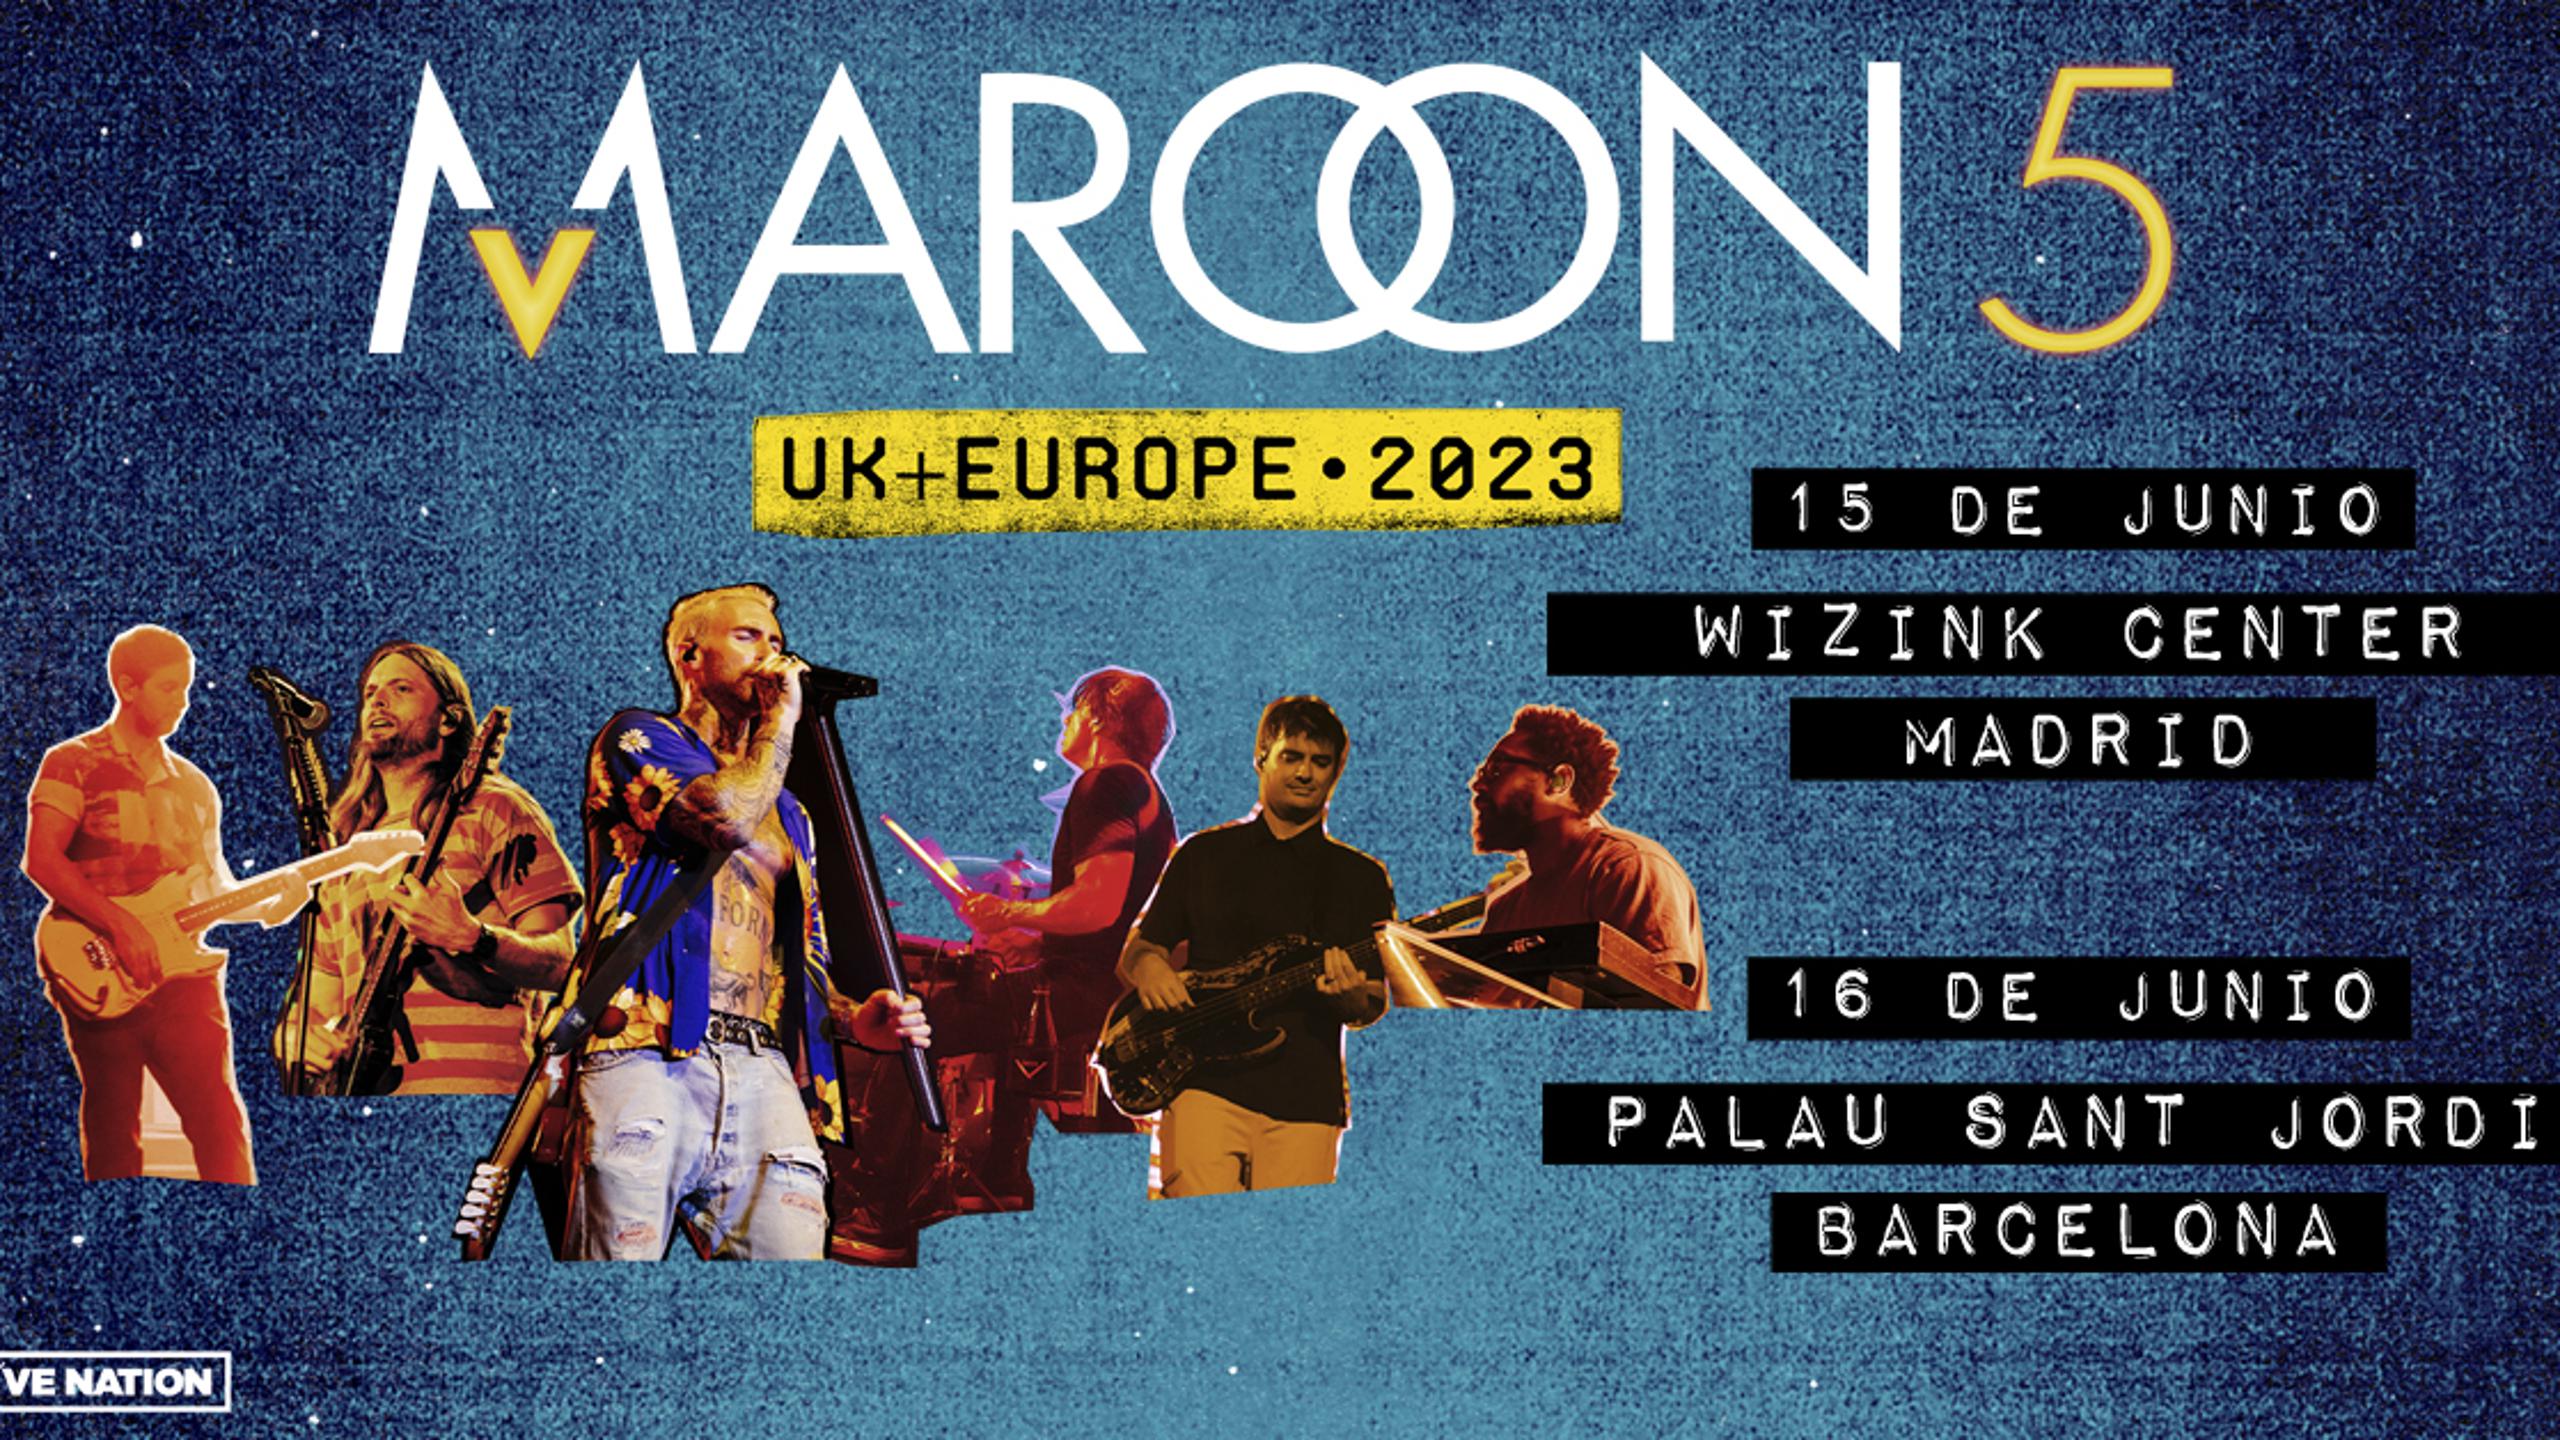 maroon 5 uk europe 2023 barcelona spain 16834799485805216